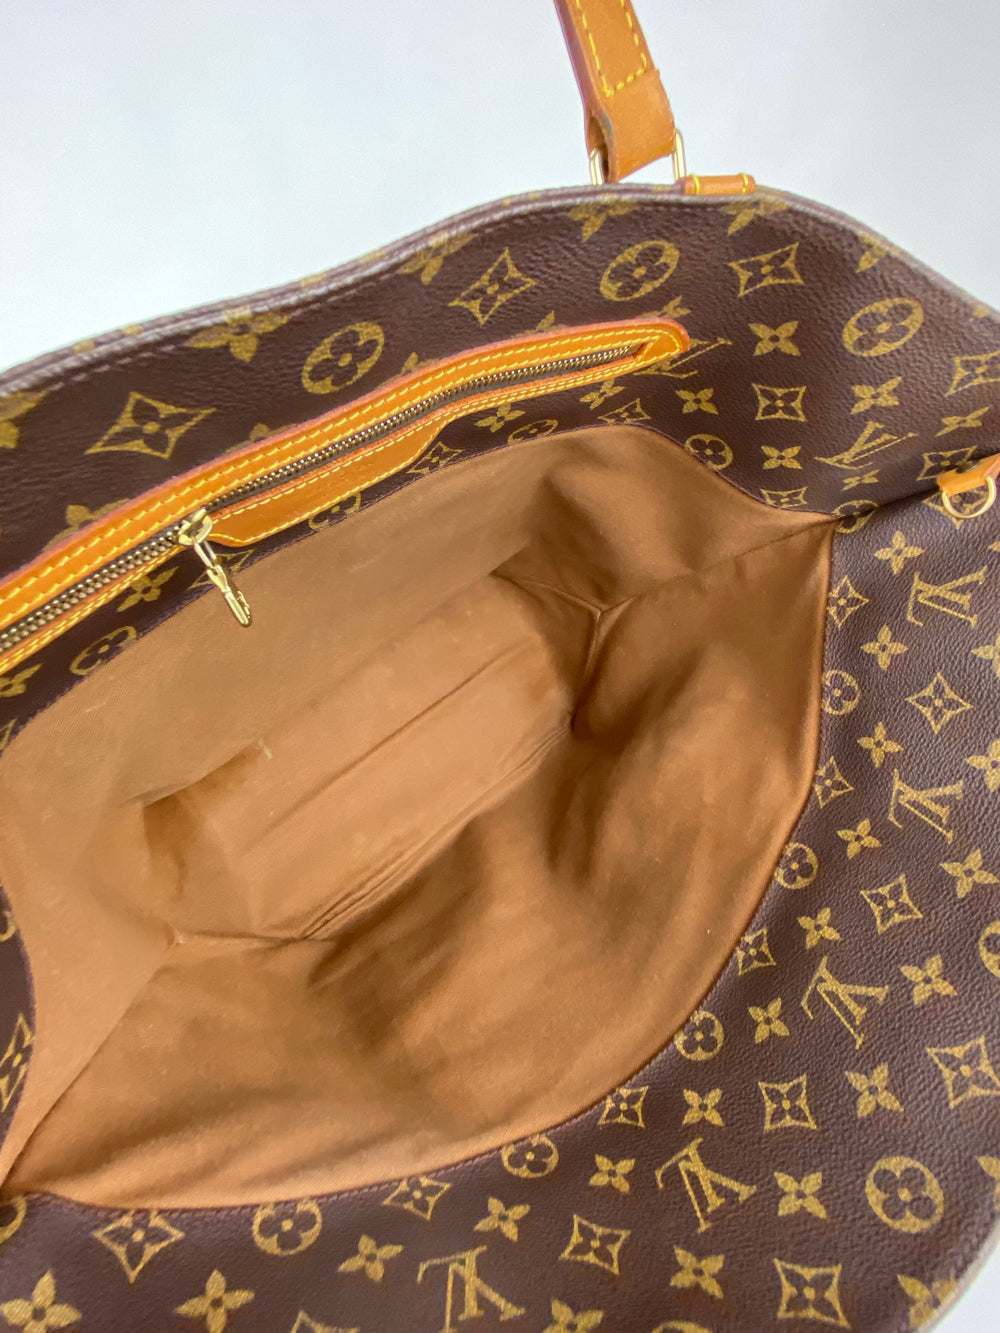 Louis Vuitton Classic Monogram Canvas Sac Shopping Tote Bag